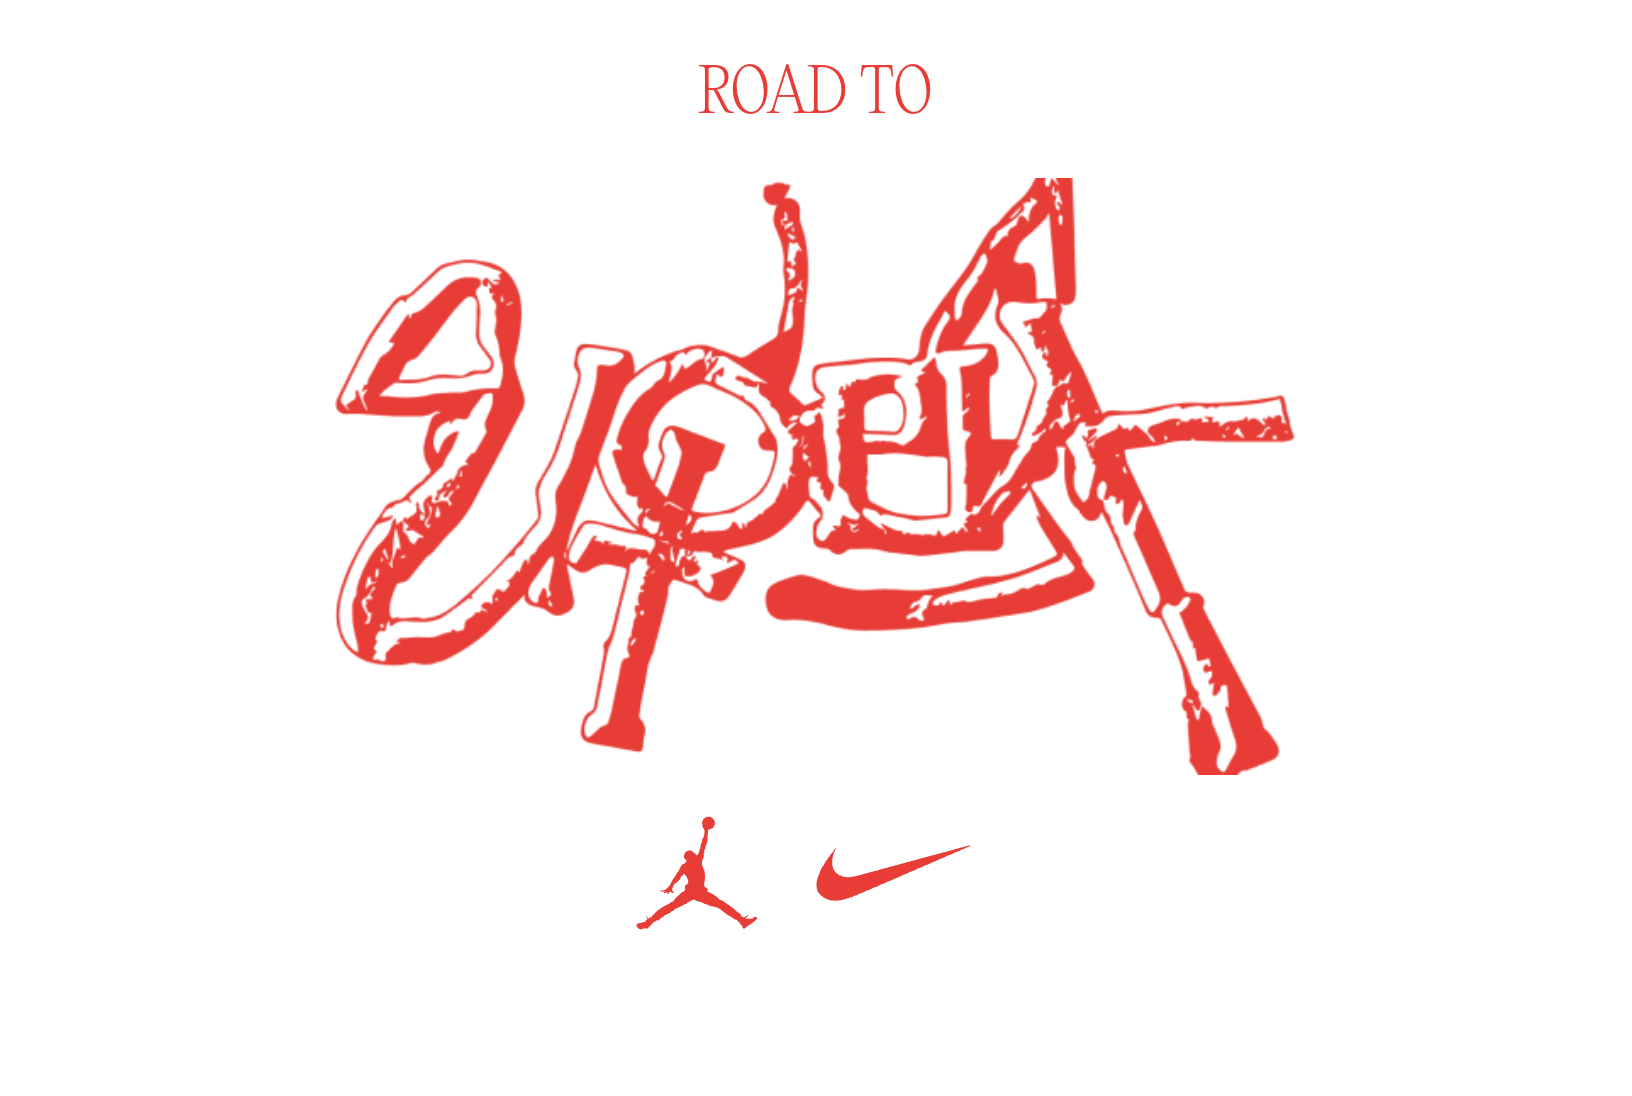 Travis Scott x Jordan Brand 'Road to Utopia' Experience